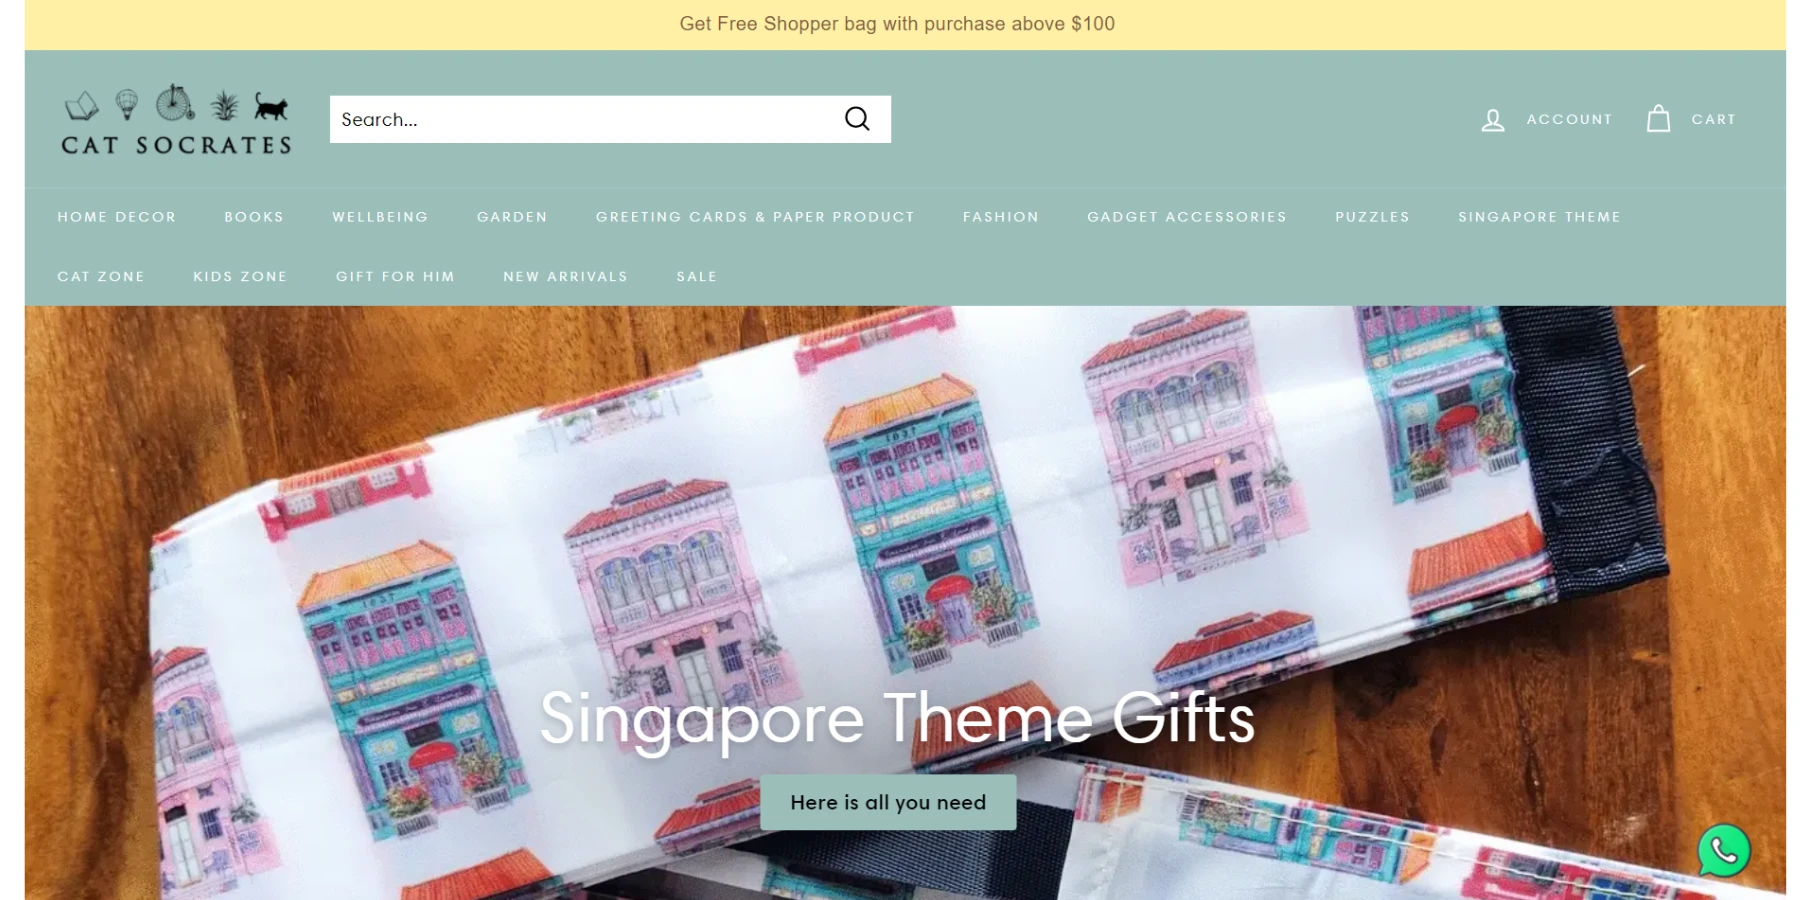 Gift shop singapore - cat socrates